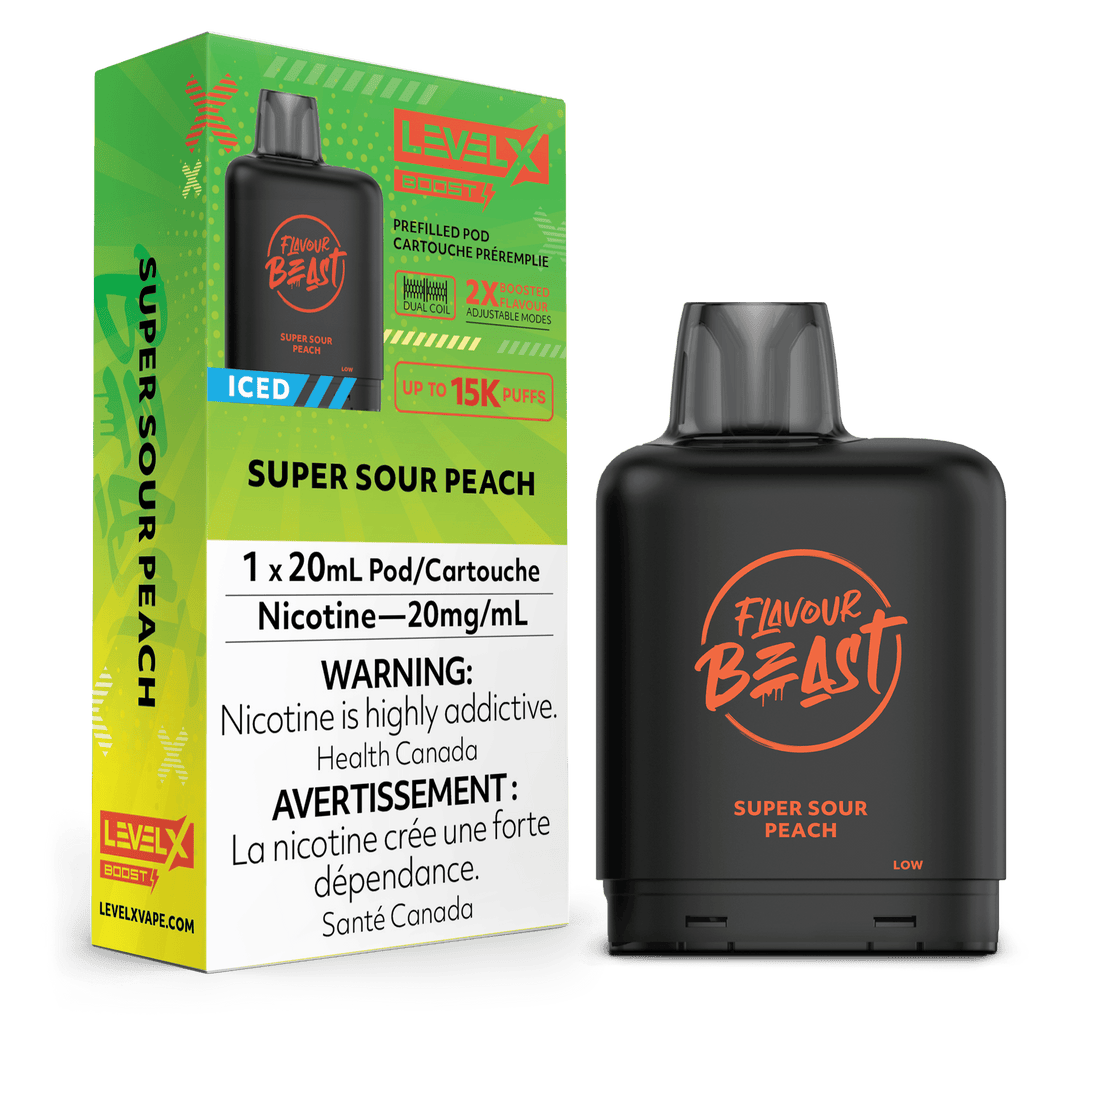 Level X Boost Flavour Beast - Super Sour Peach Iced - Vapor Shoppe